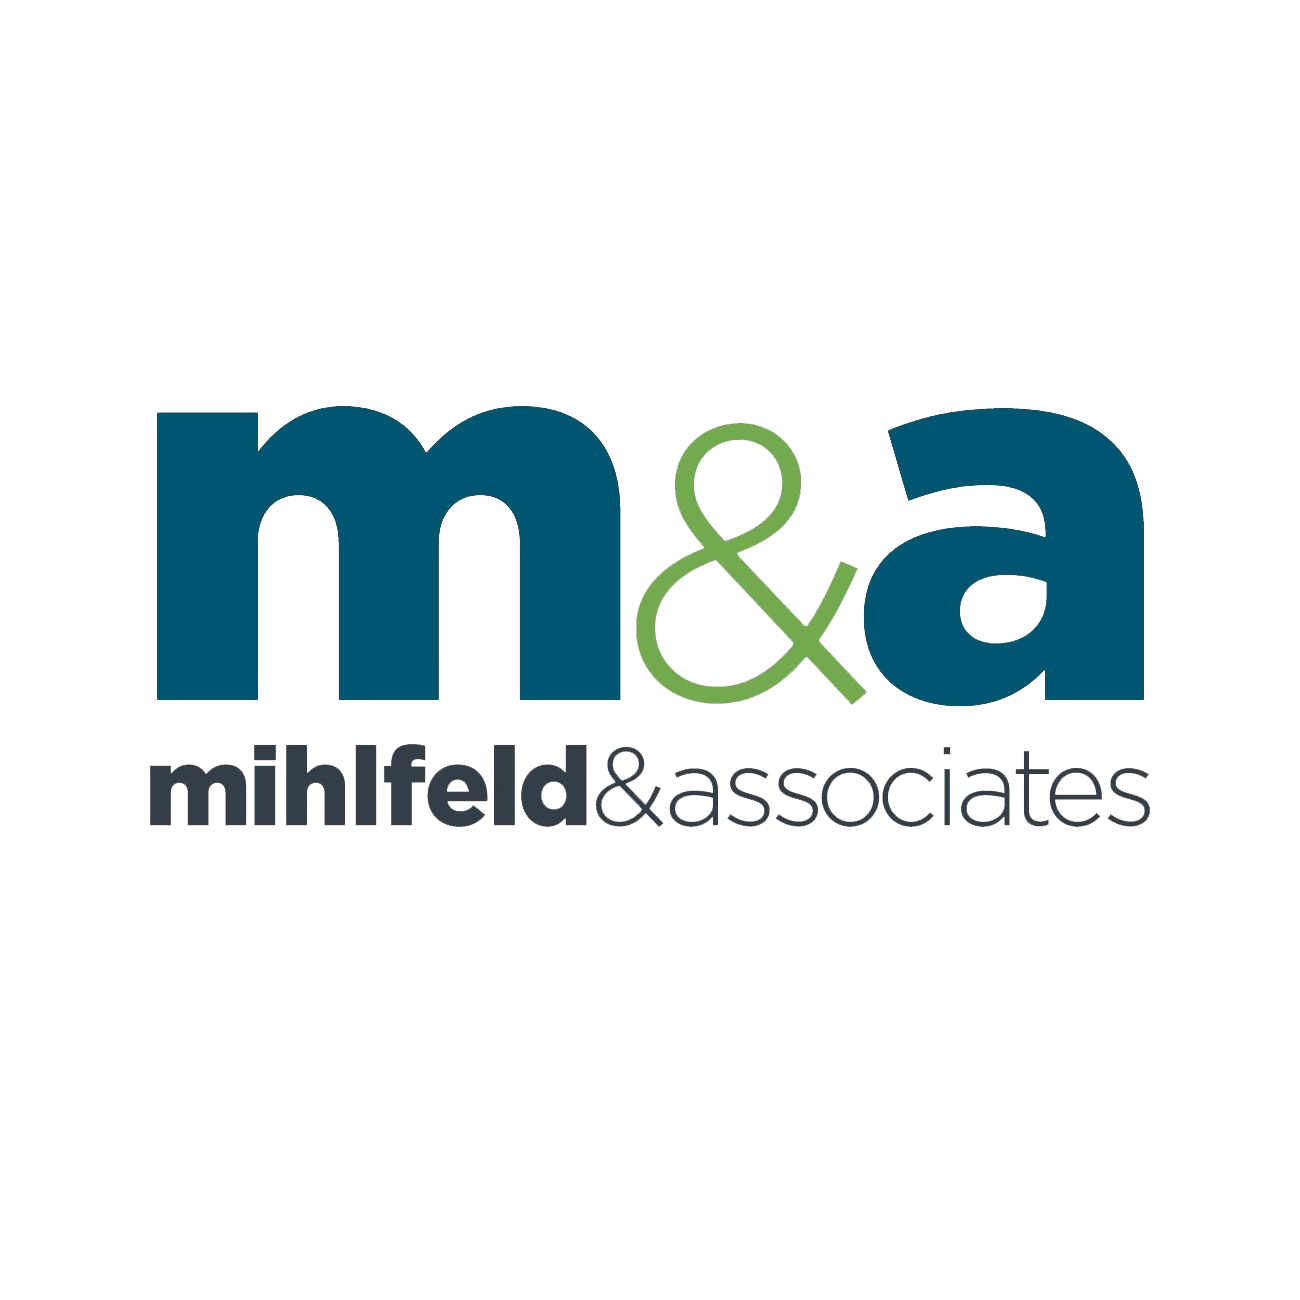 Mihlfeld & Associates